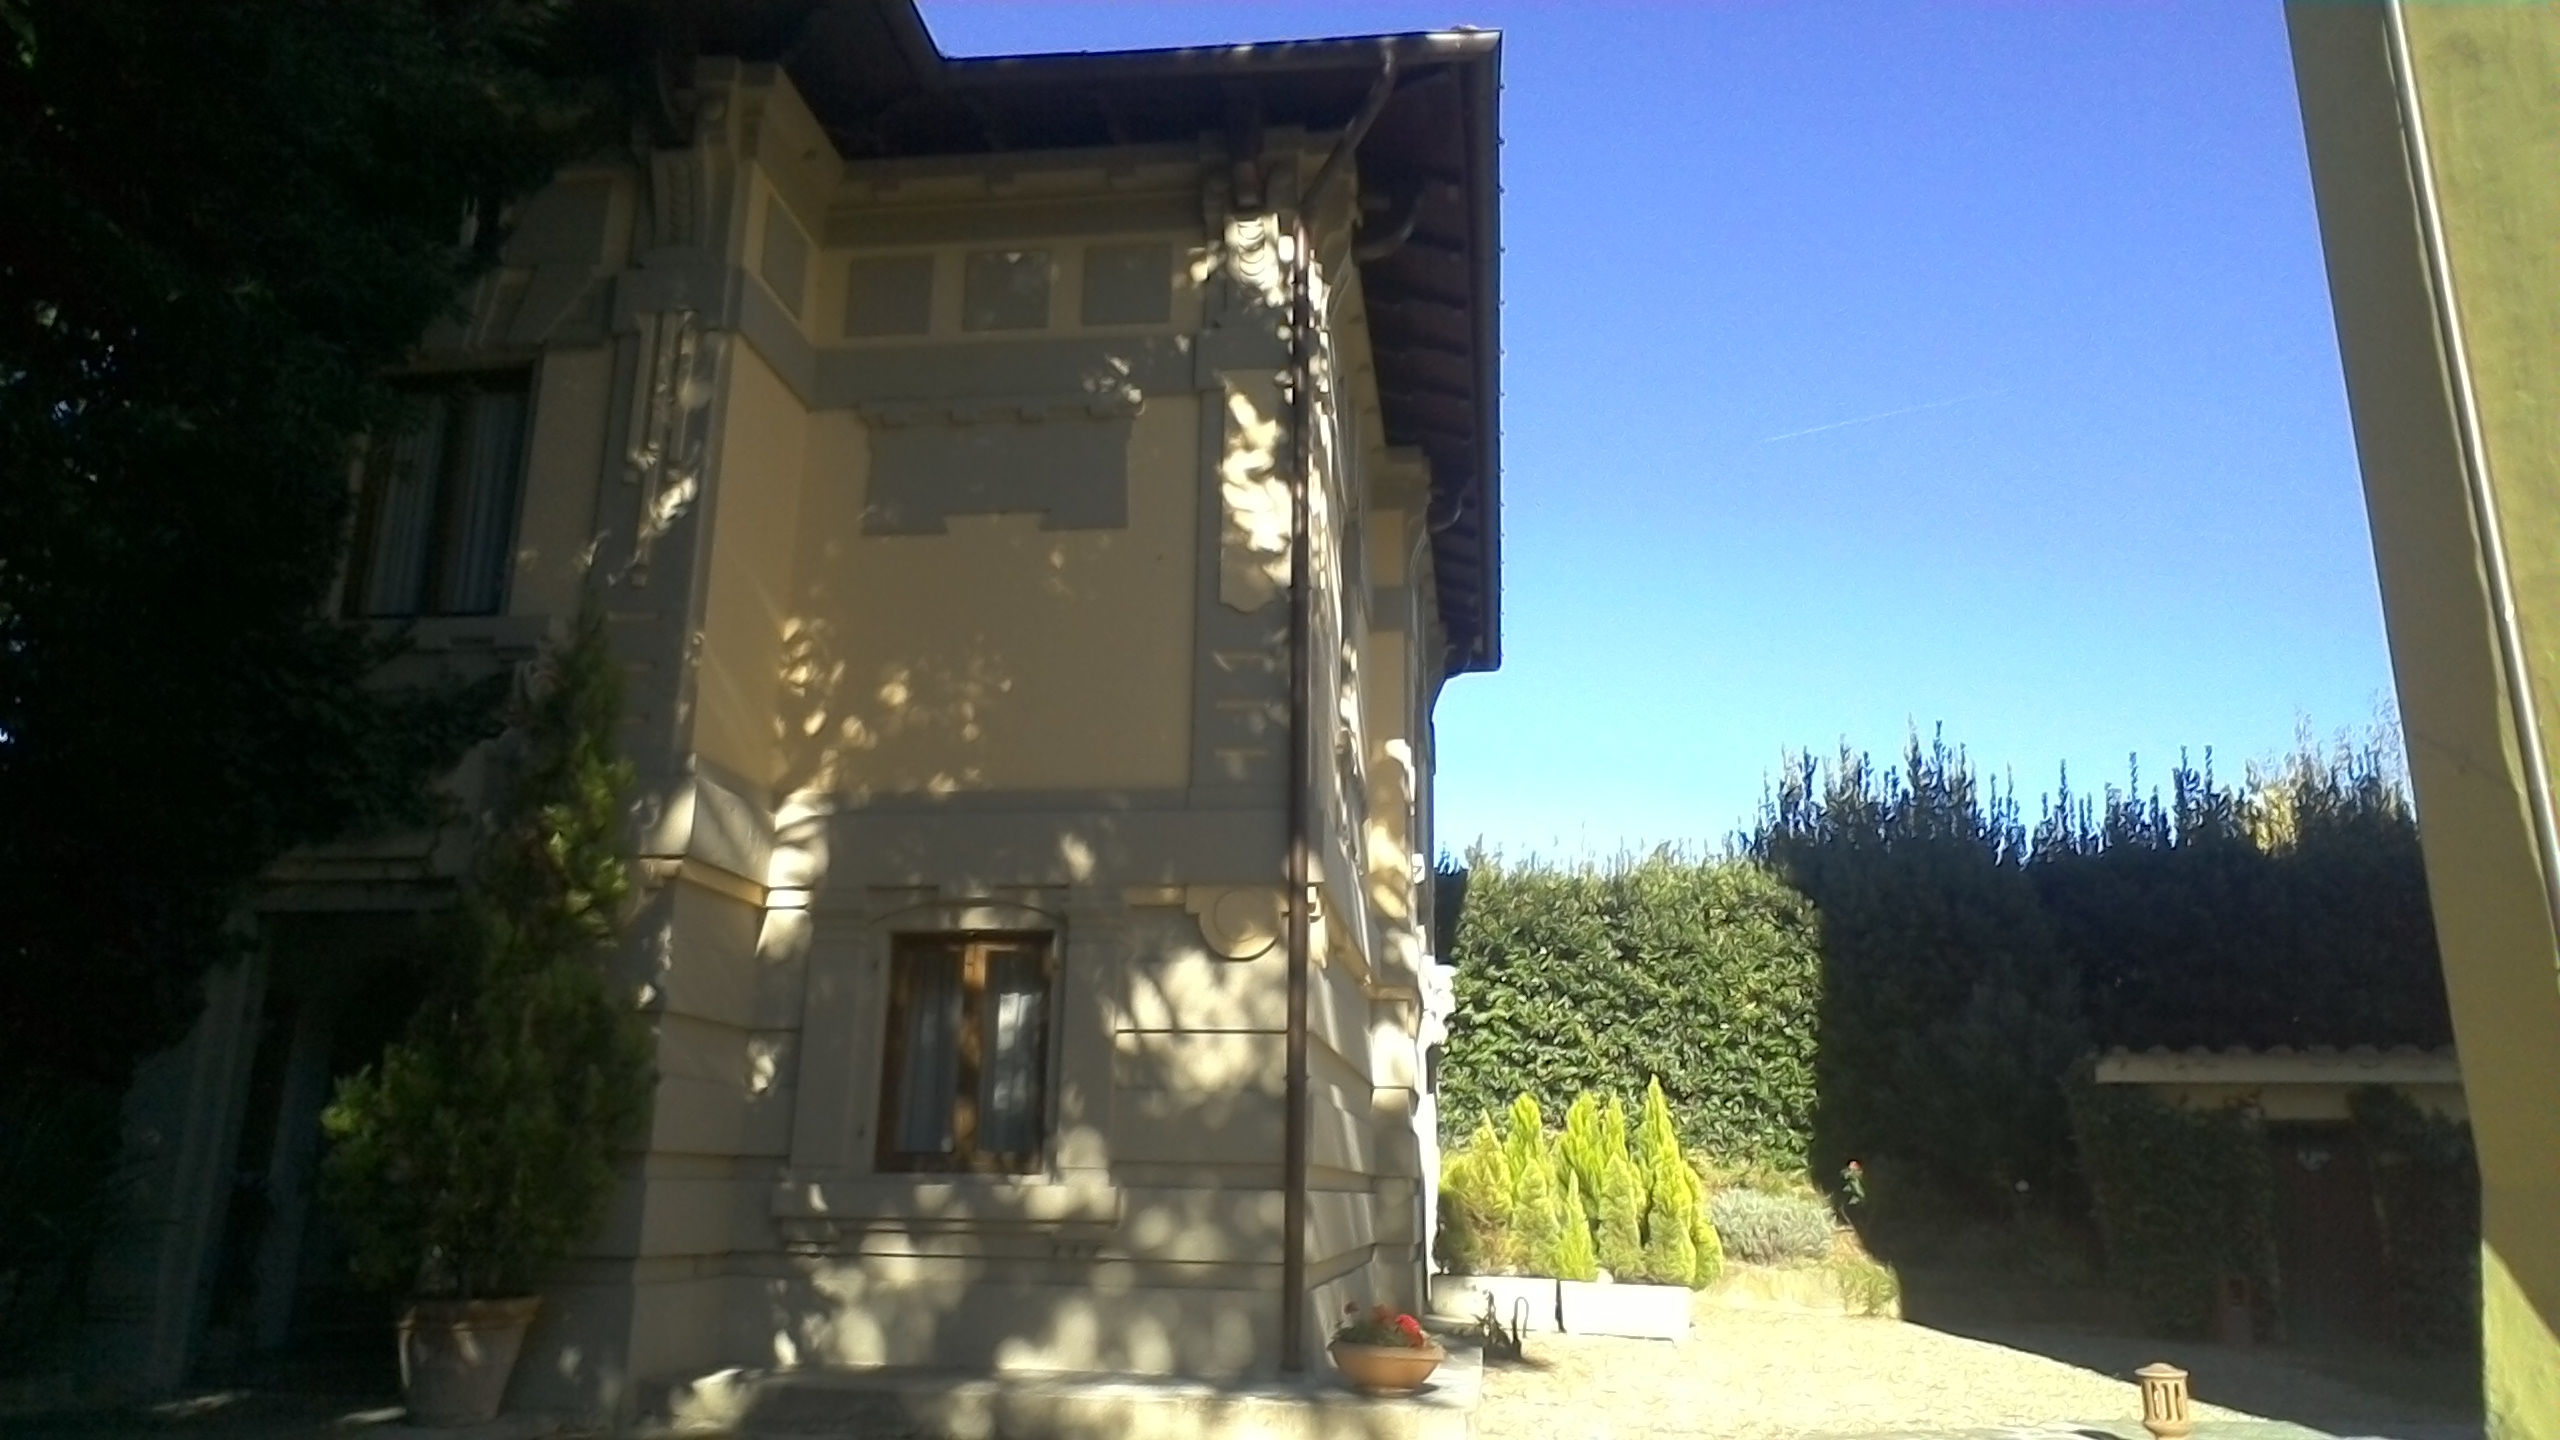 Villa Betania